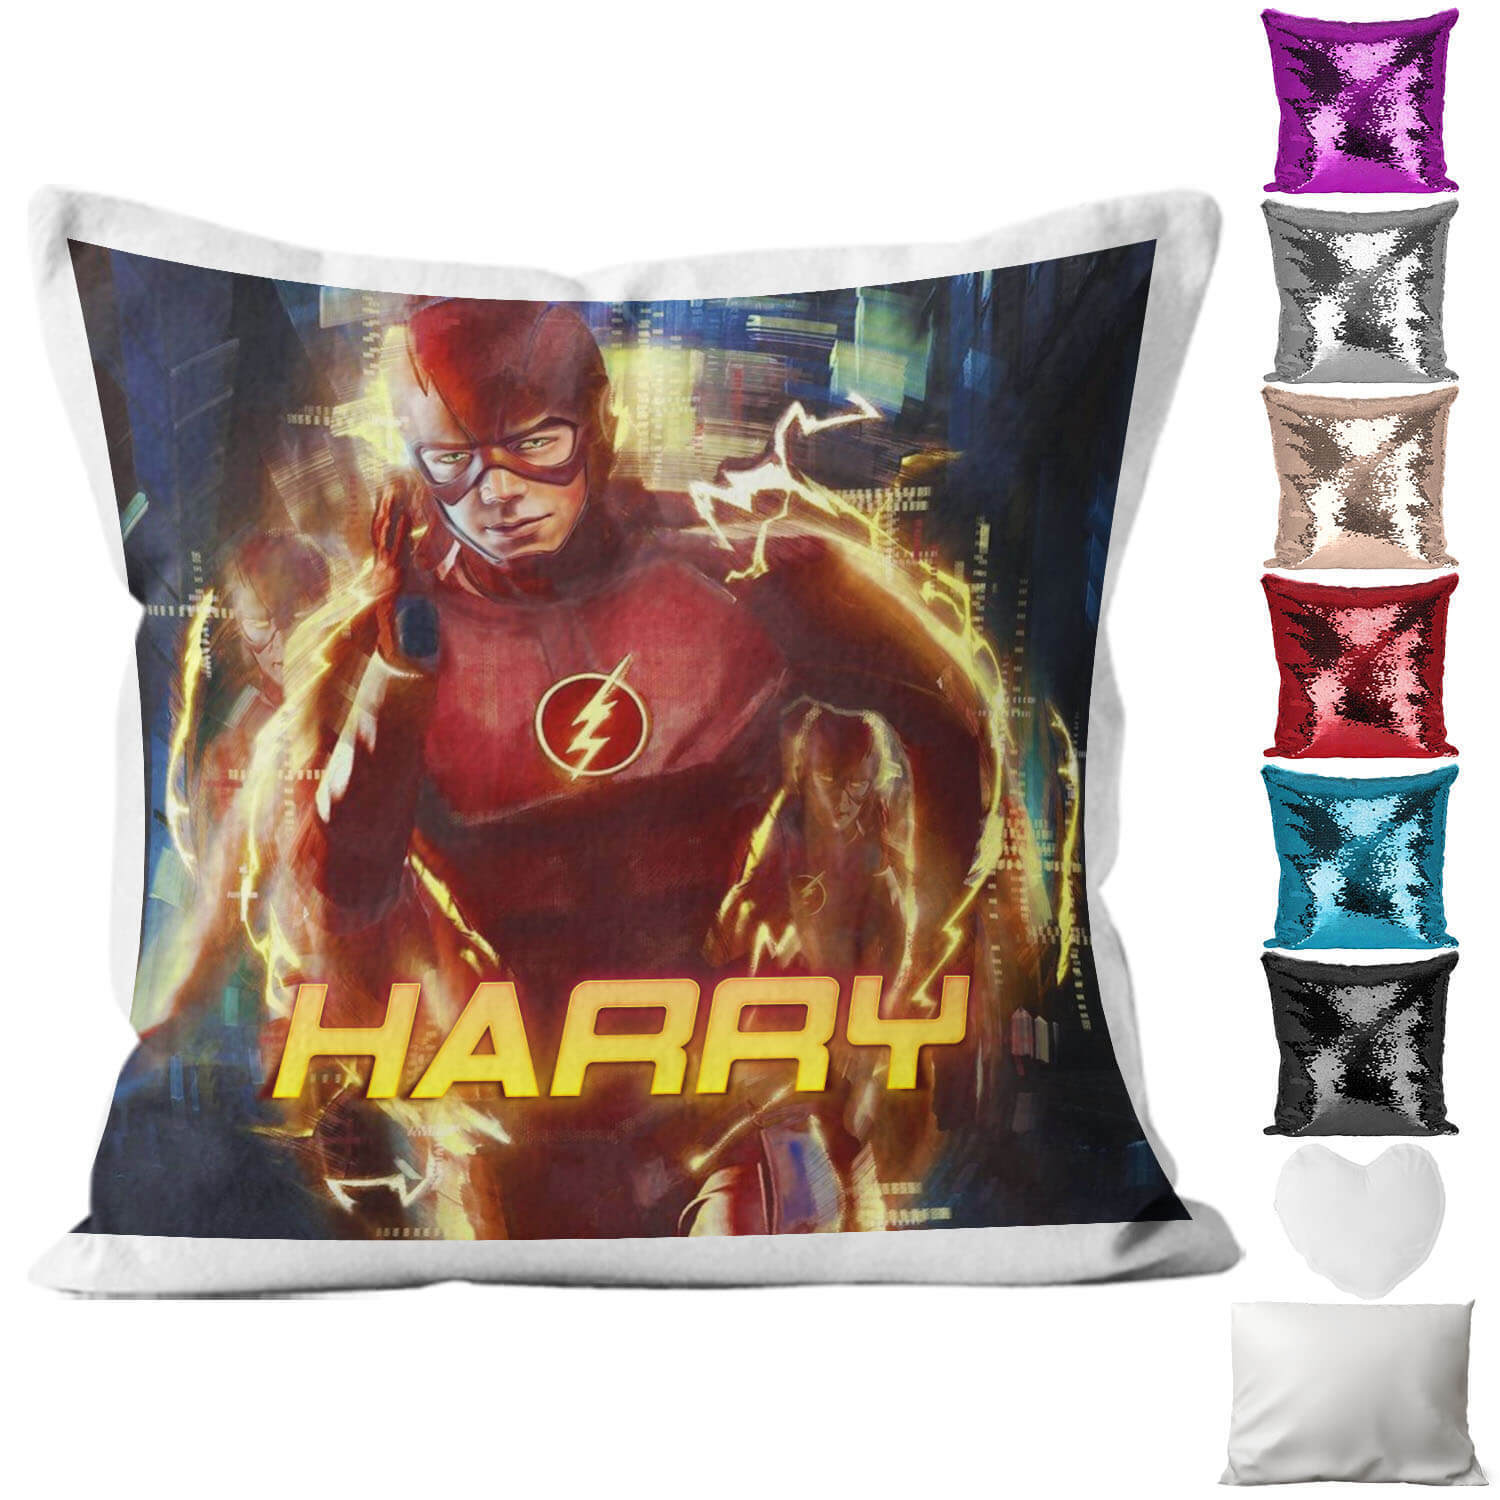 Personalised Cushion Super Hero Sequin Cushion Pillow Printed Birthday Gift 10